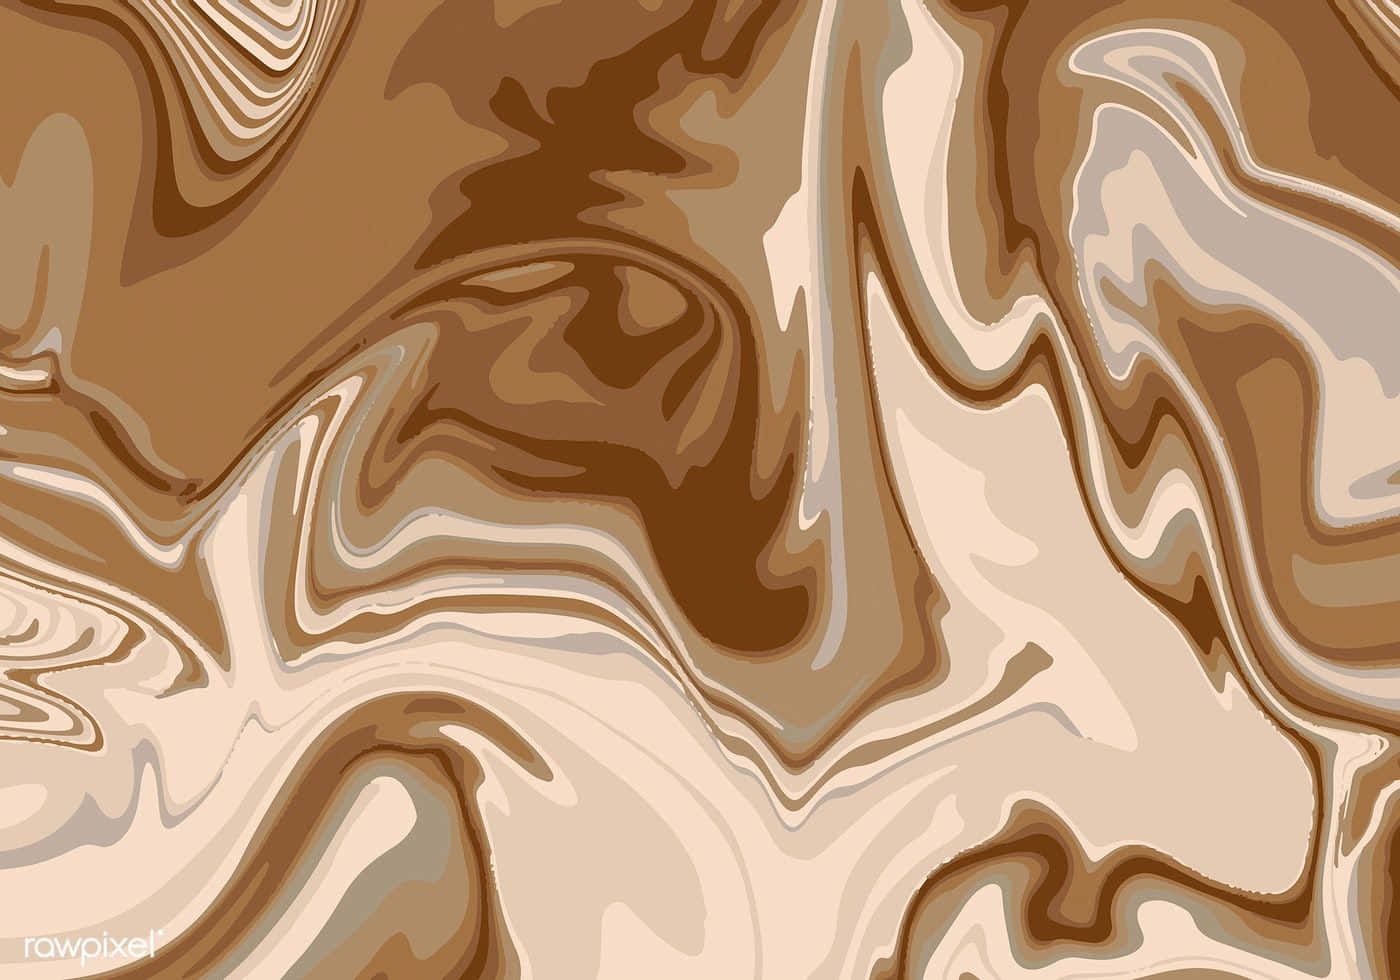 Elegantefondo De Pantalla Abstracto En Color Marrón. Fondo de pantalla